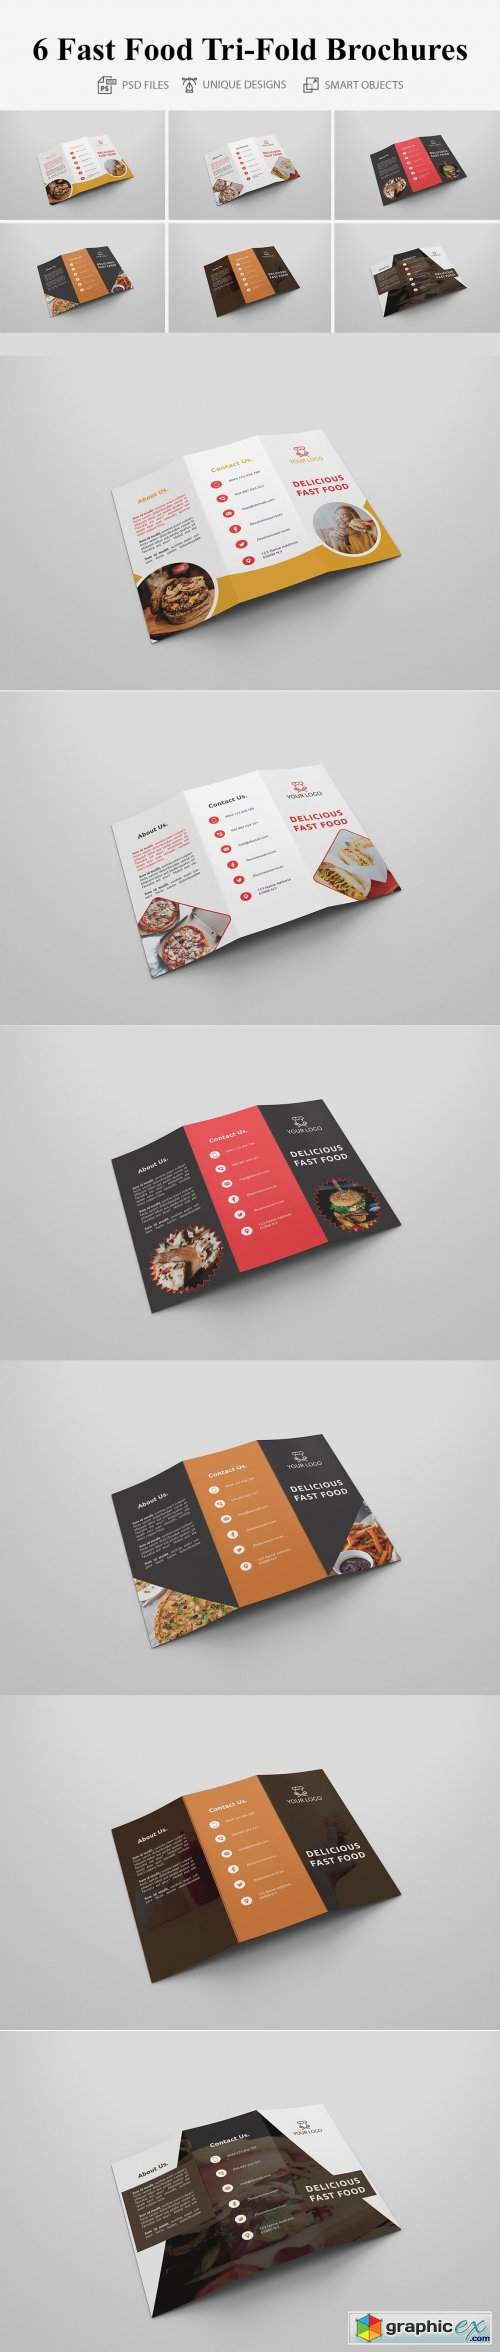 6 Fast Food Tri-fold Brochures